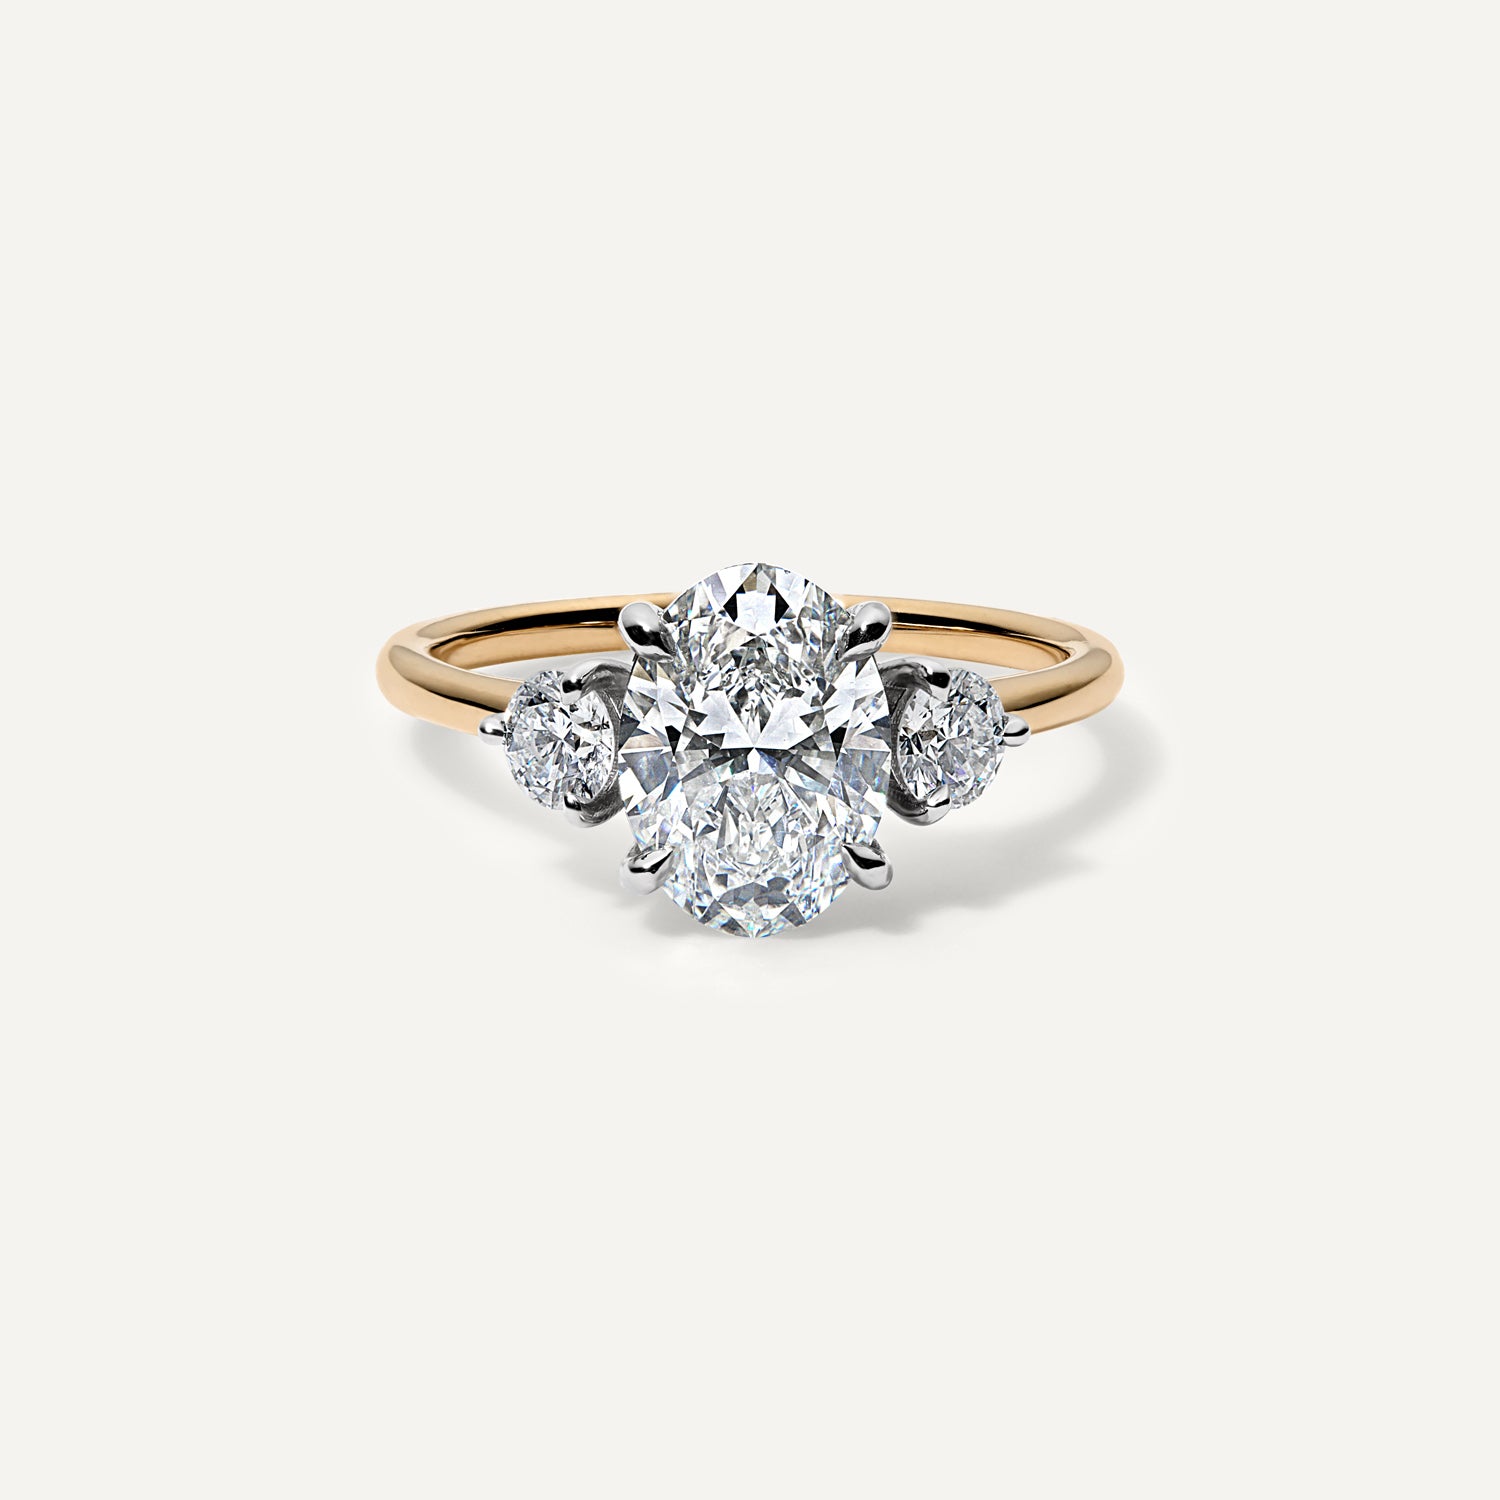 Three stone oval lab diamond engagement ring.